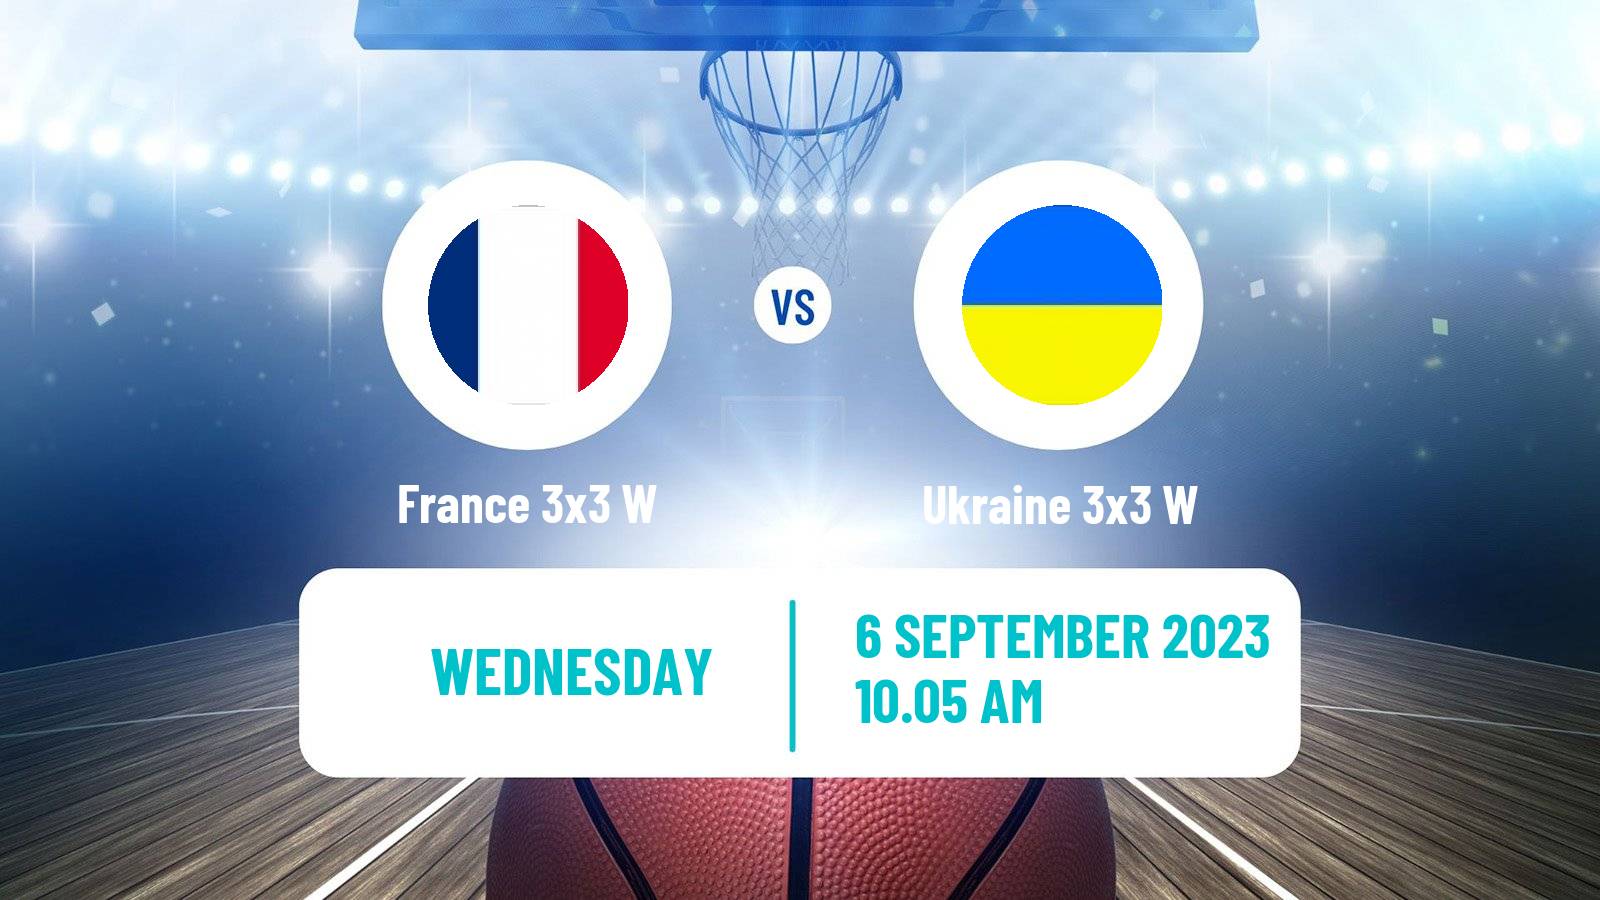 Basketball Europe Cup Basketball 3x3 Women France 3x3 W - Ukraine 3x3 W